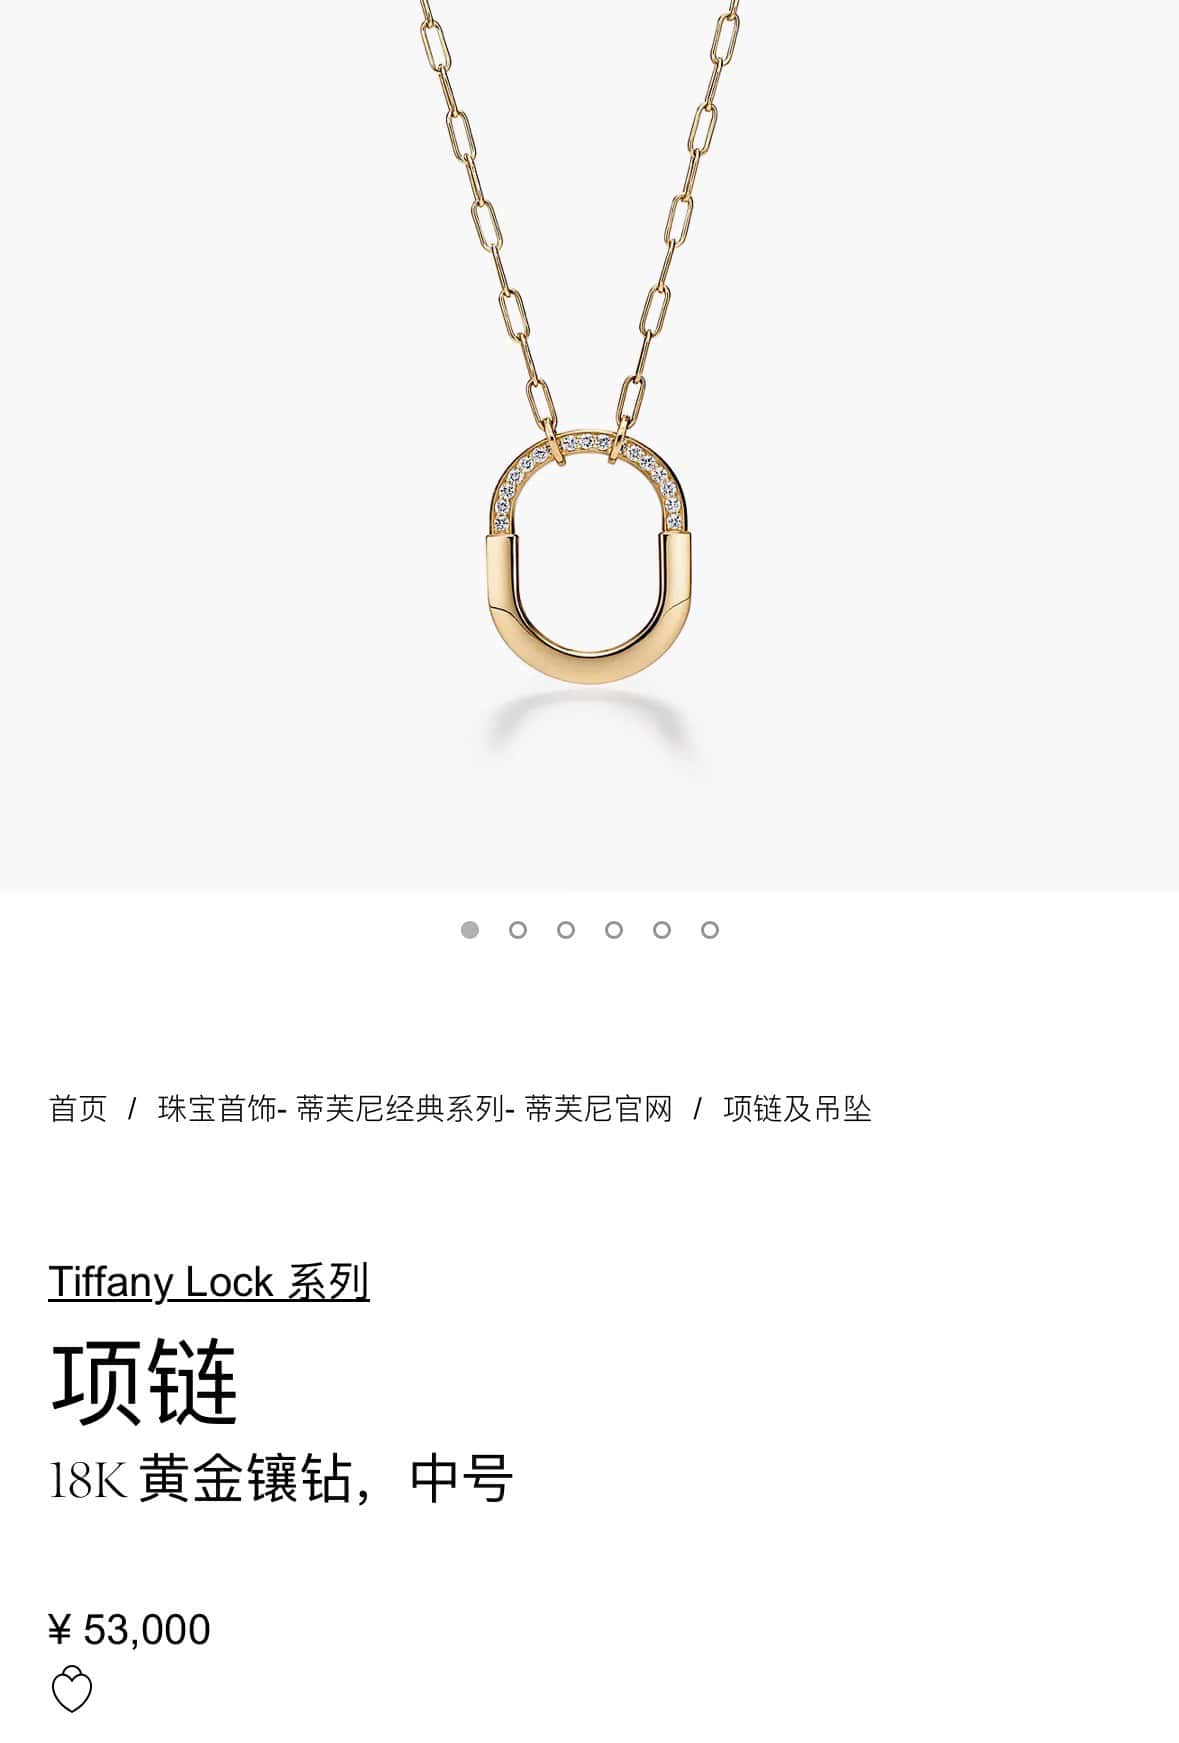 Tiffany Lock半鉆鎖頭項鏈 Tiffany&co 蒂芙尼 Tiffany Lock繫列高仿a貨